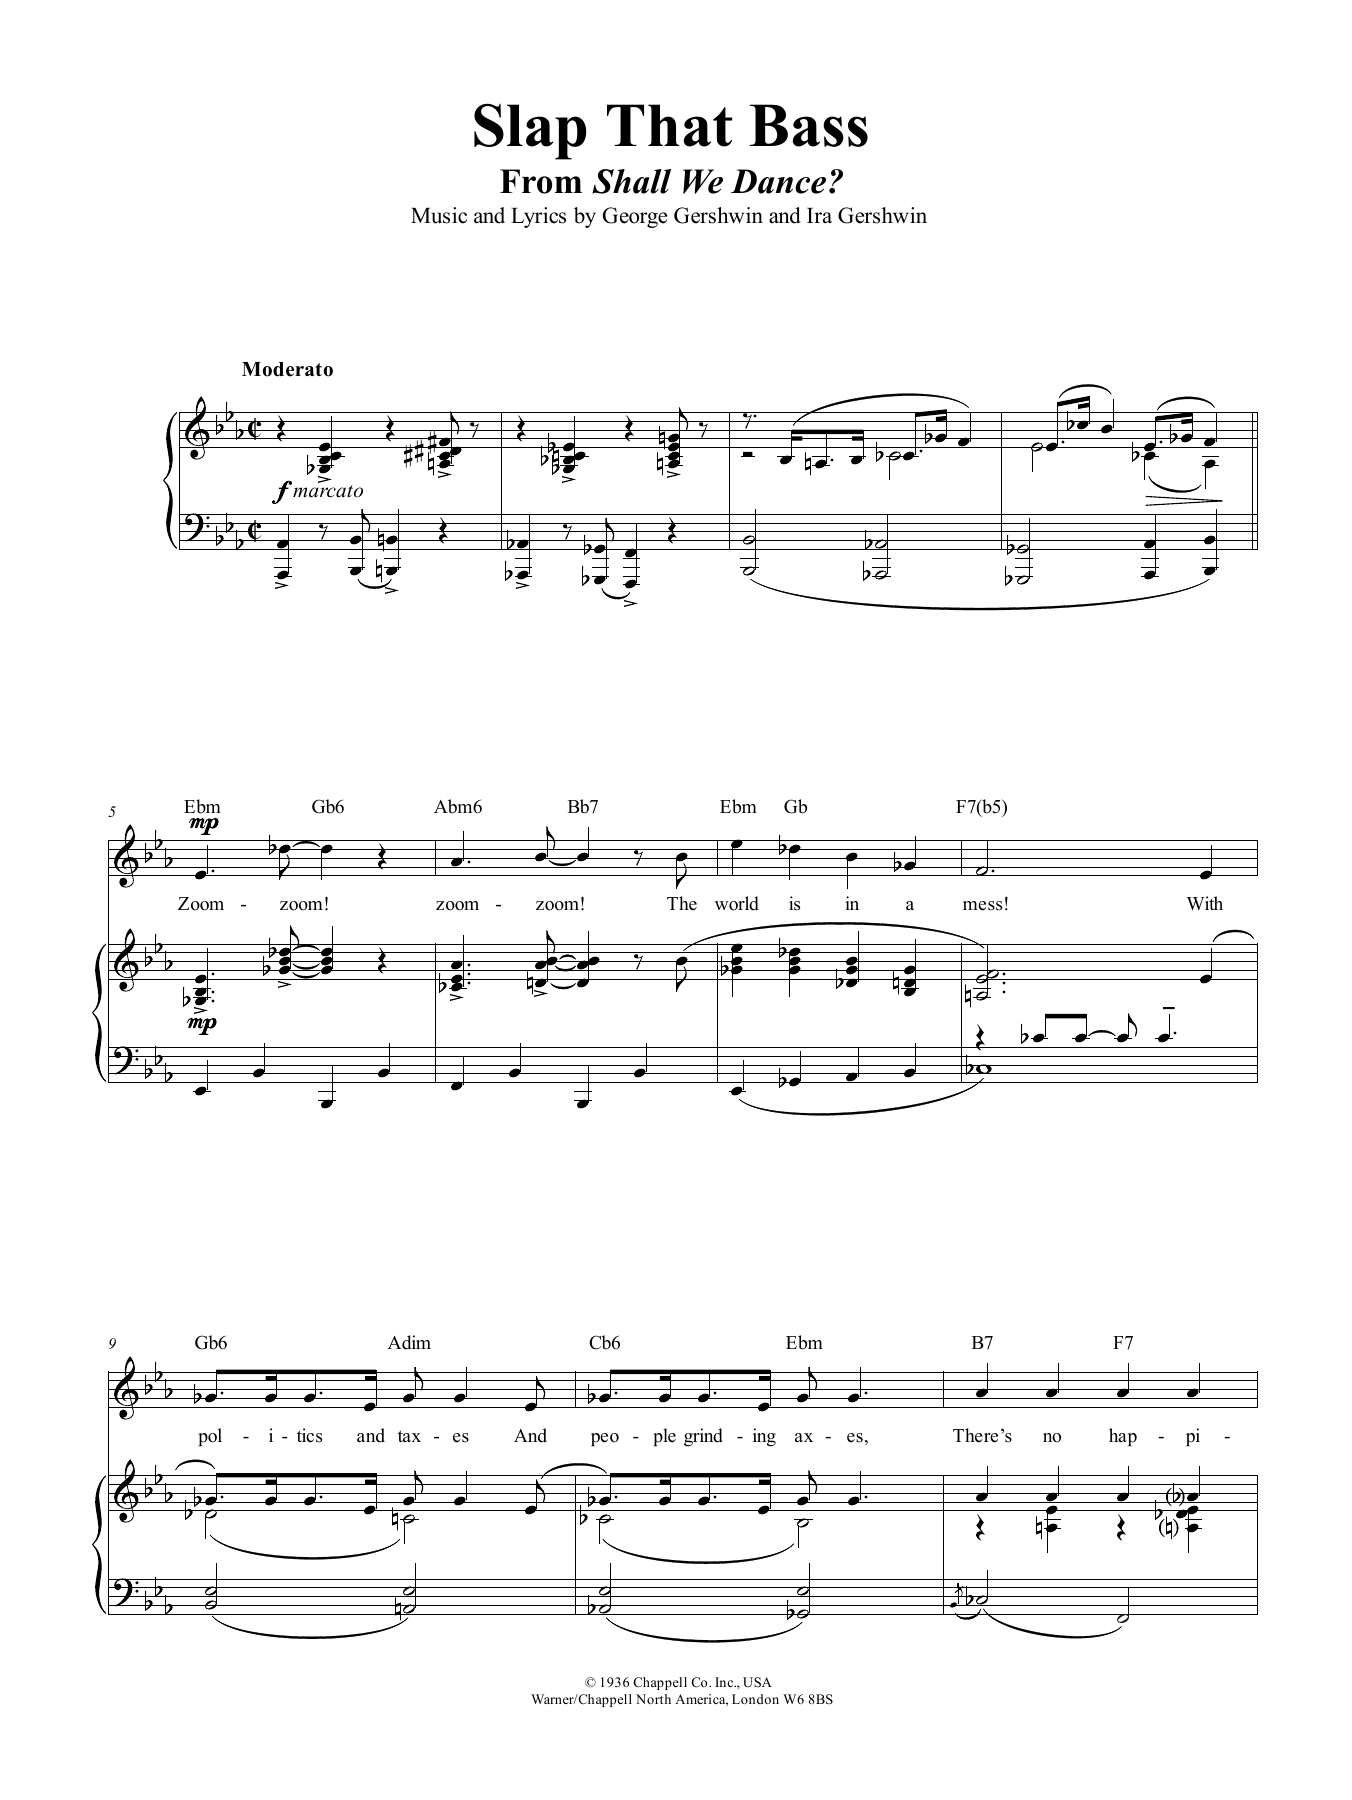 George Gershwin Slap That Bass Sheet Music Notes & Chords for Melody Line, Lyrics & Chords - Download or Print PDF